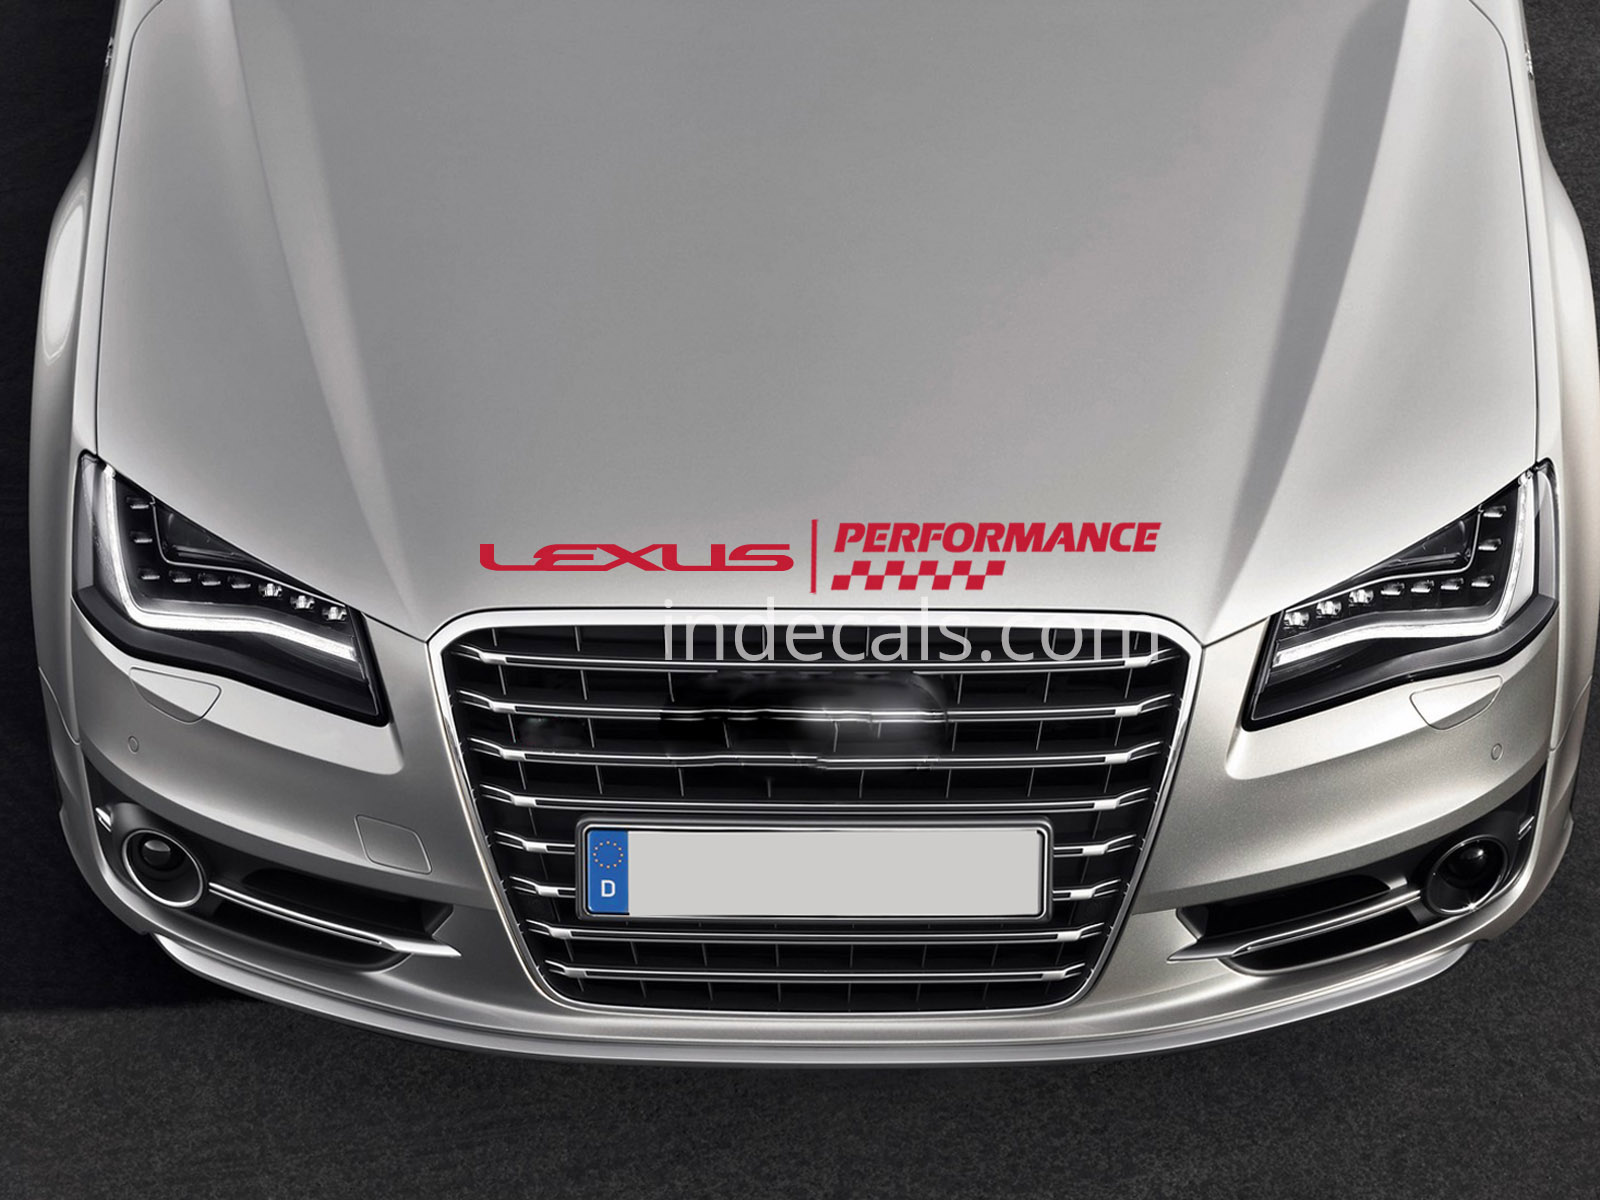 1 x Lexus Performance Sticker for Bonnet - Red